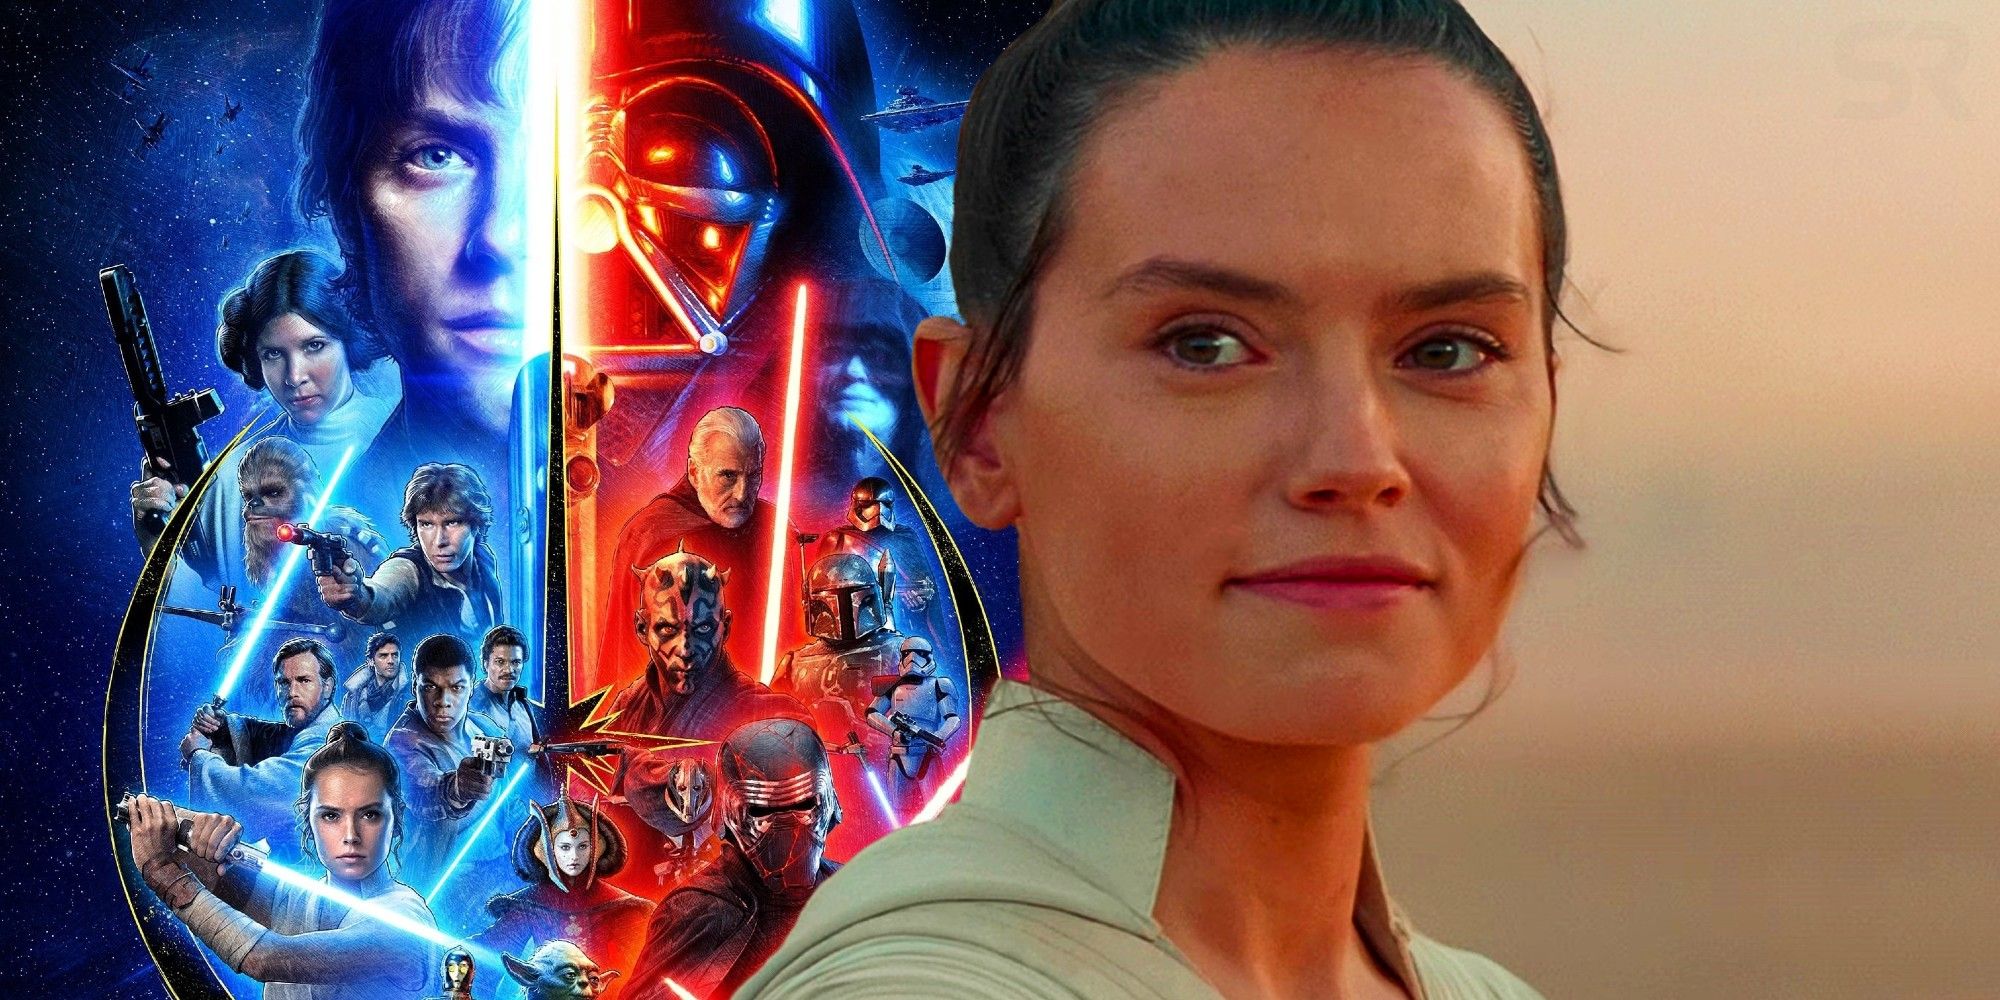 Star Wars' Next Movie Rumored to Start Filming Prep Sooner Than